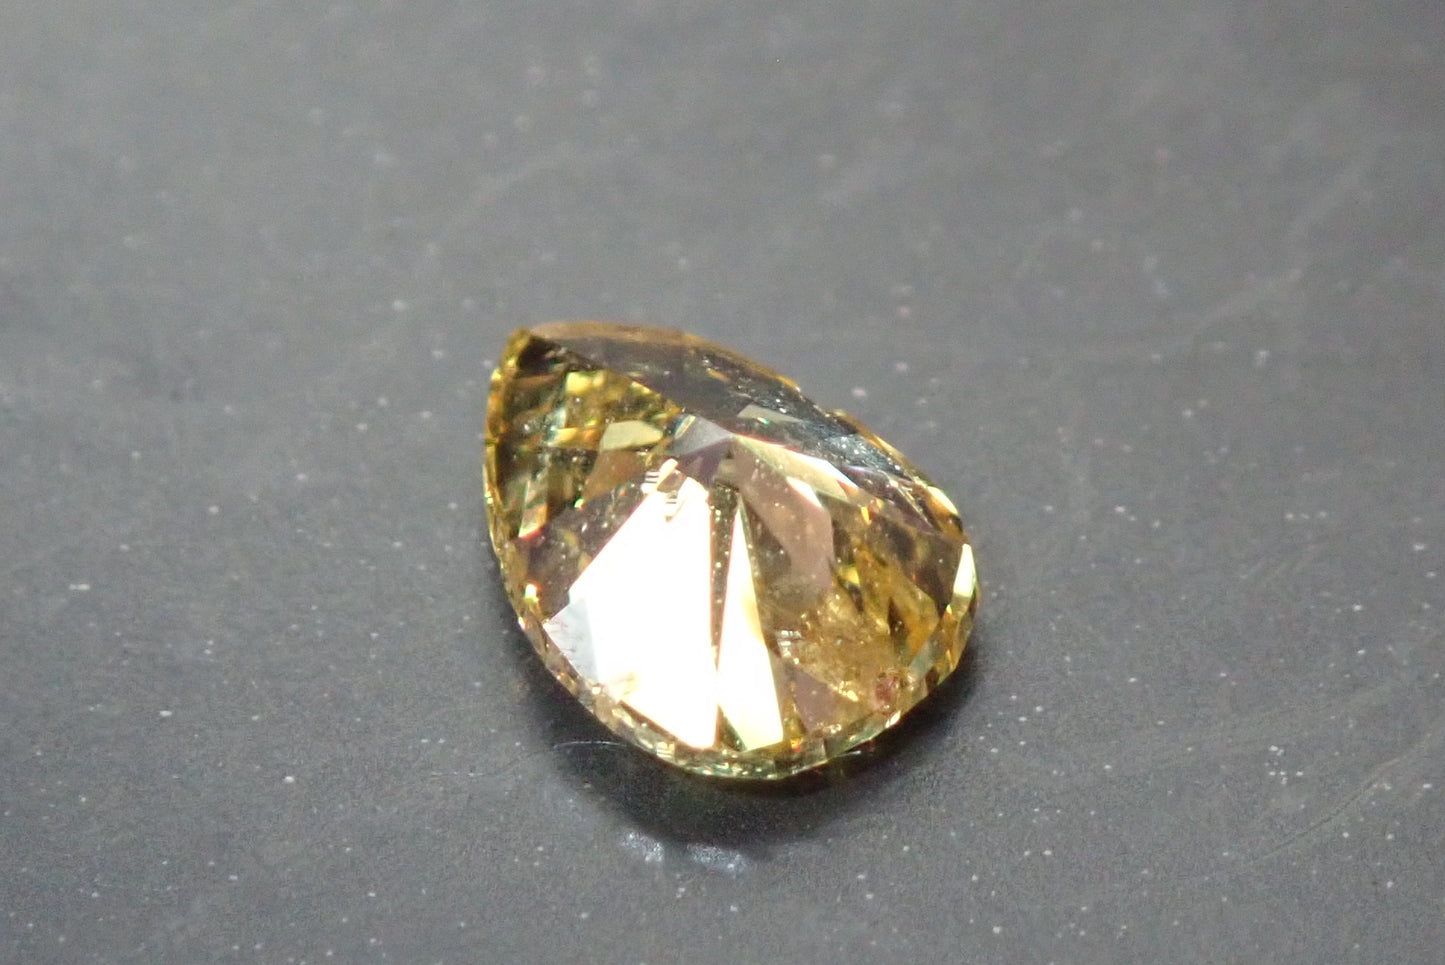 Natural fancy deep yellow diamond 0.296ct